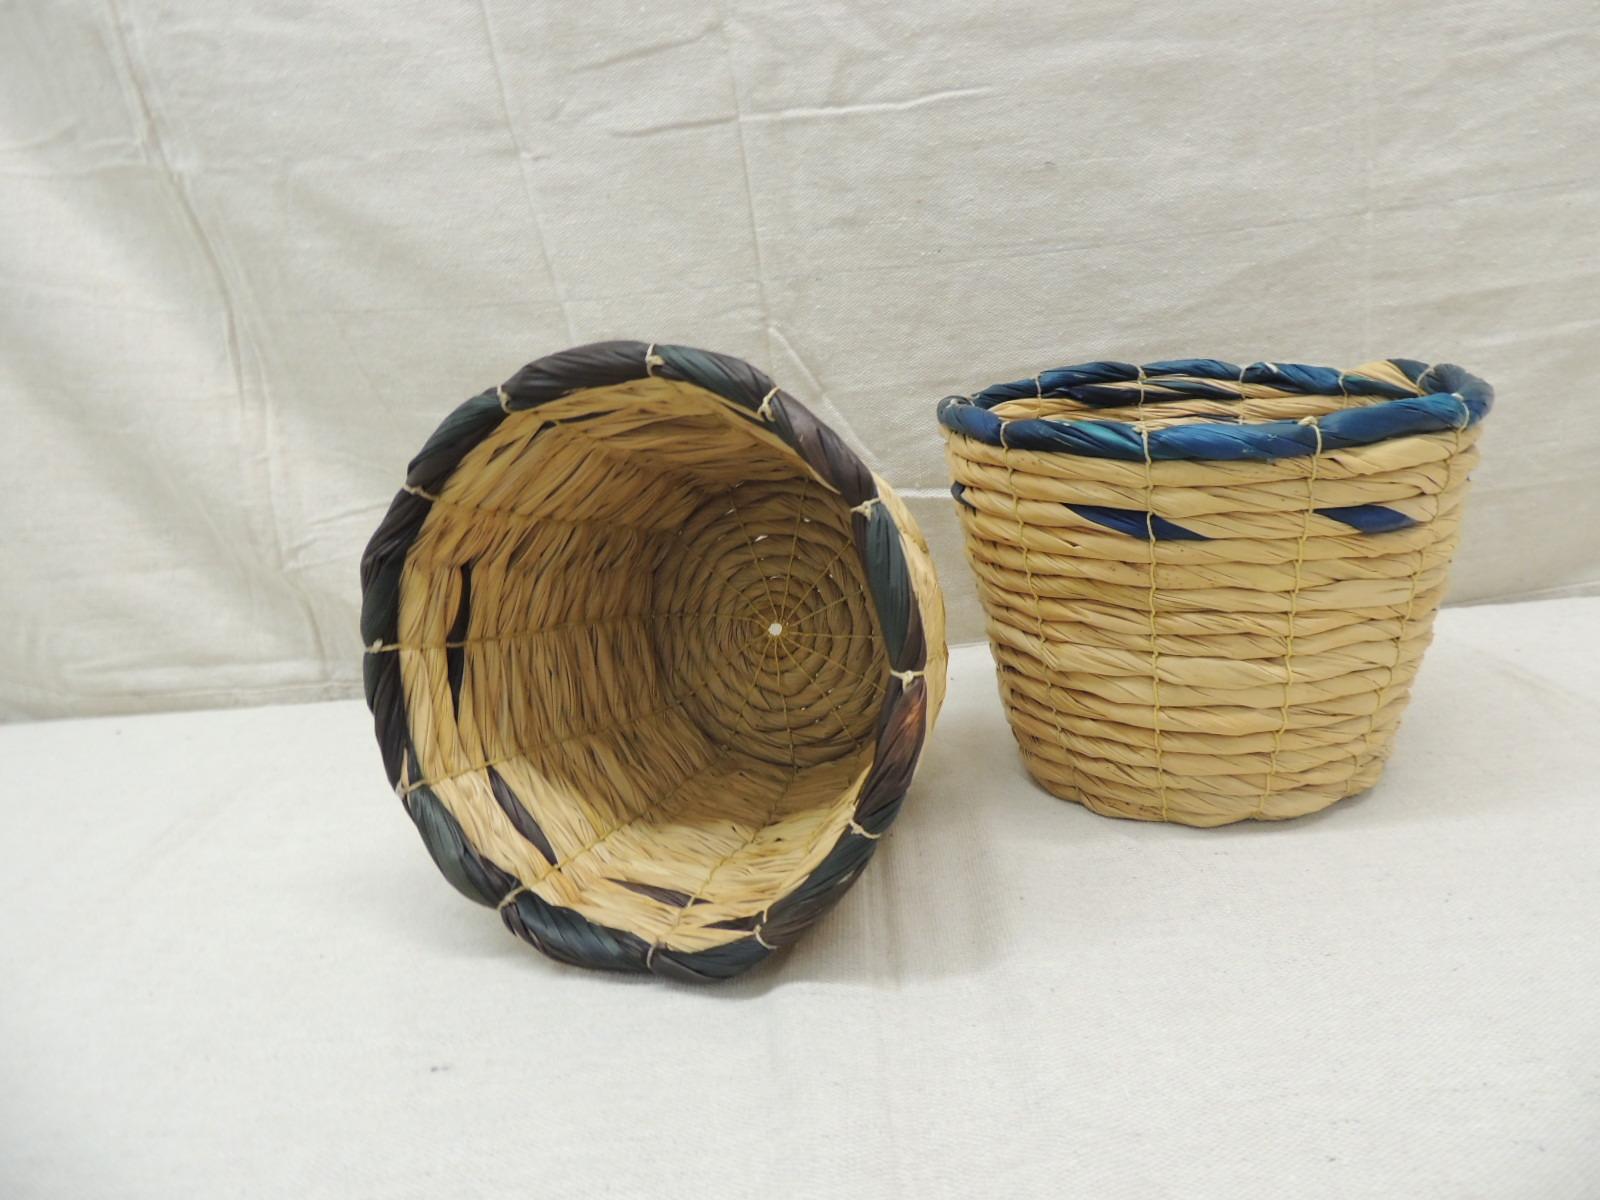 Pair of Ecuadorian Seagrass round woven planters or baskets.
Size: 7.5